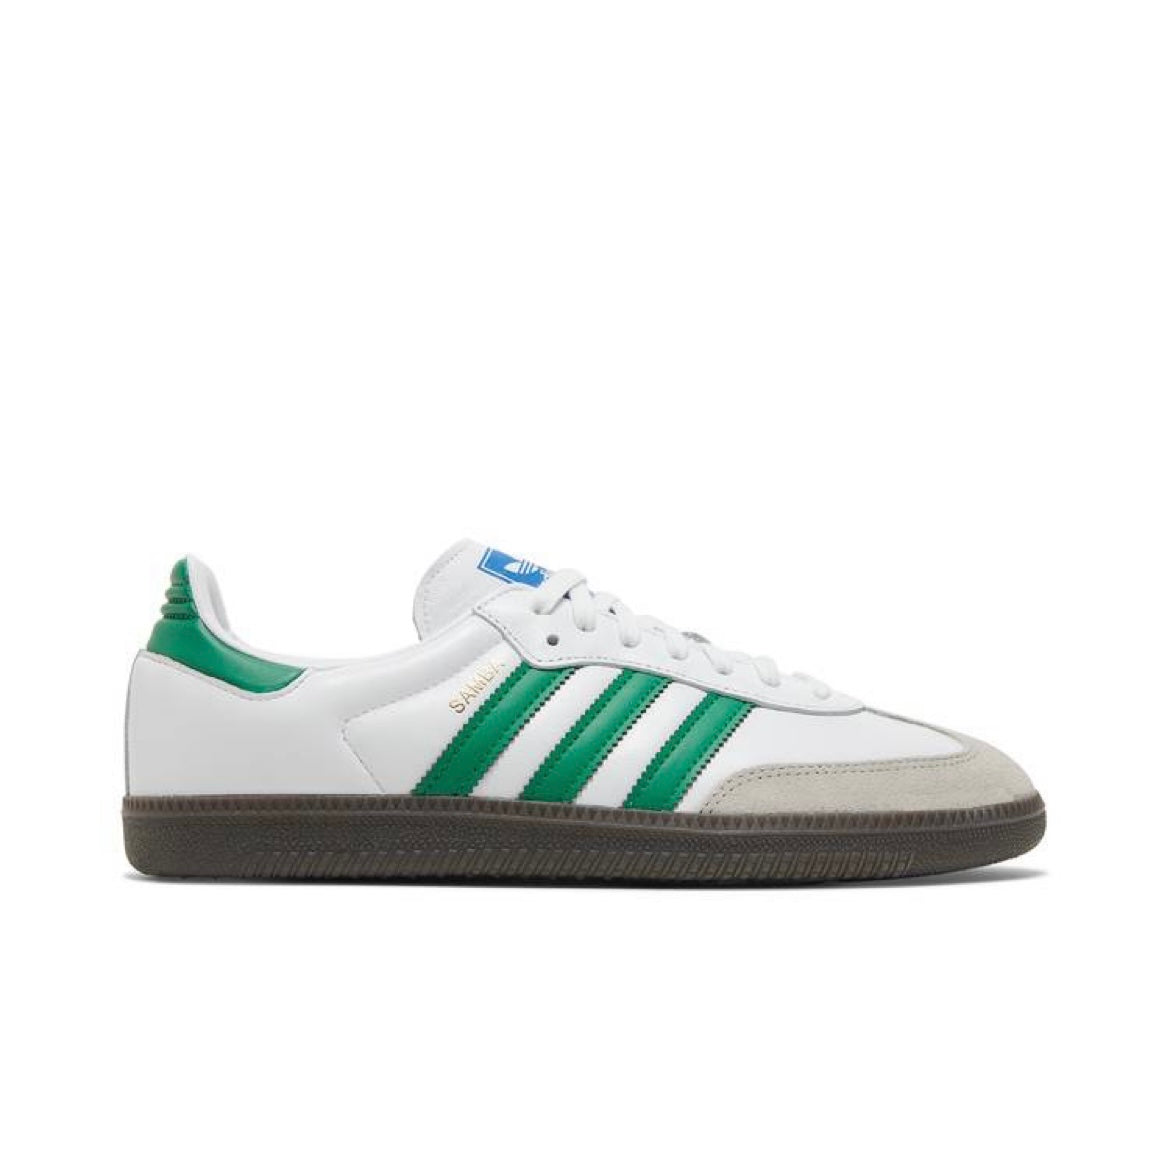 Adidas Samba OG "White Green"